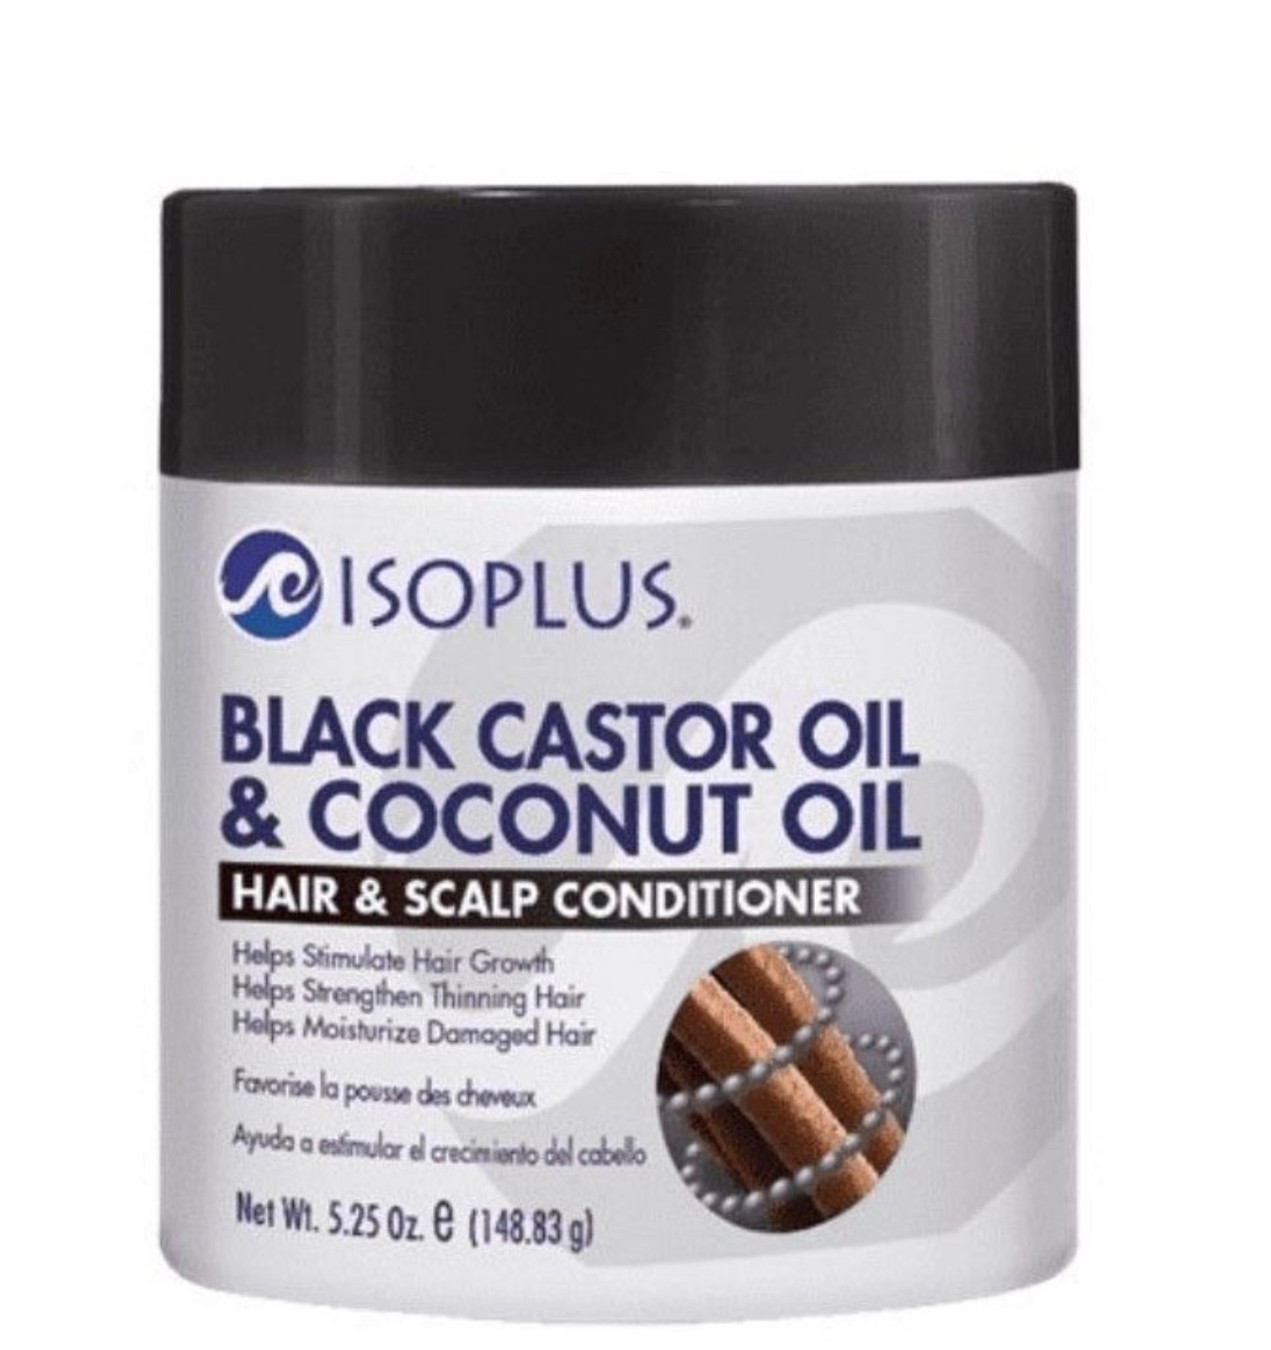 ISOPLUS Black Castor Oil & Coconut Oil Hair & Scalp Conditioner (5.25 oz)